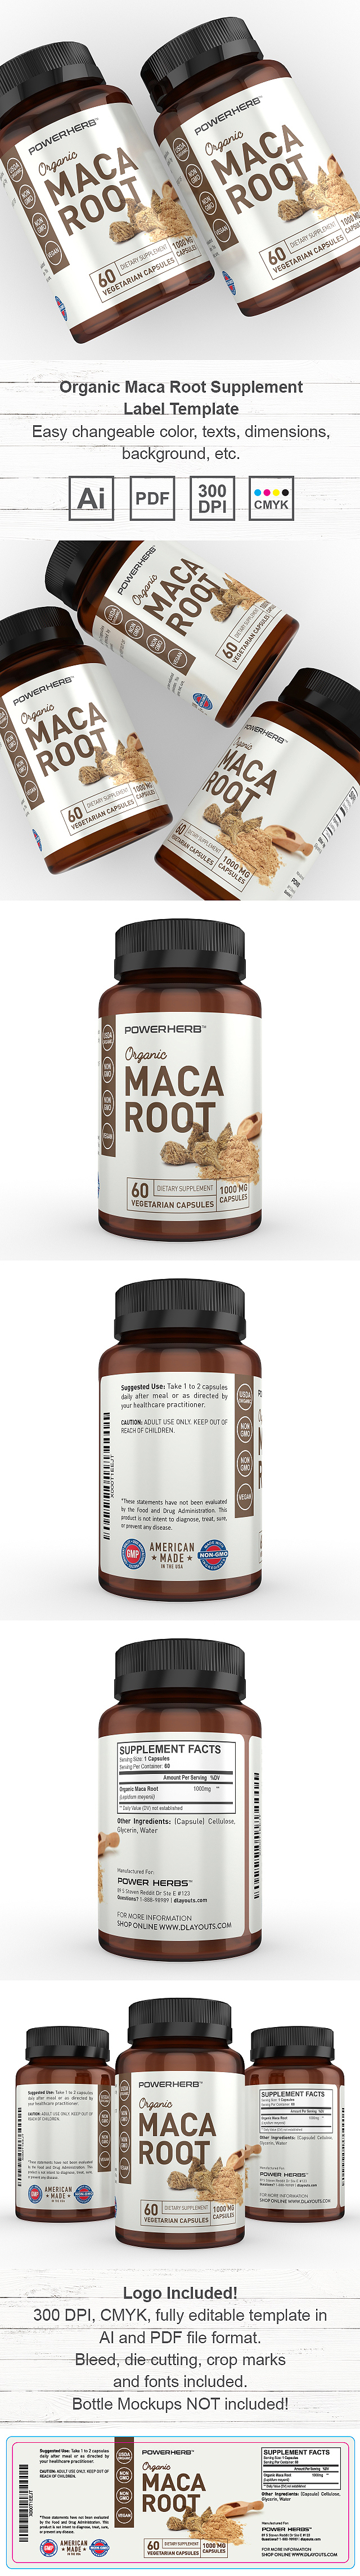 Organic Maca Root Supplement Label Template